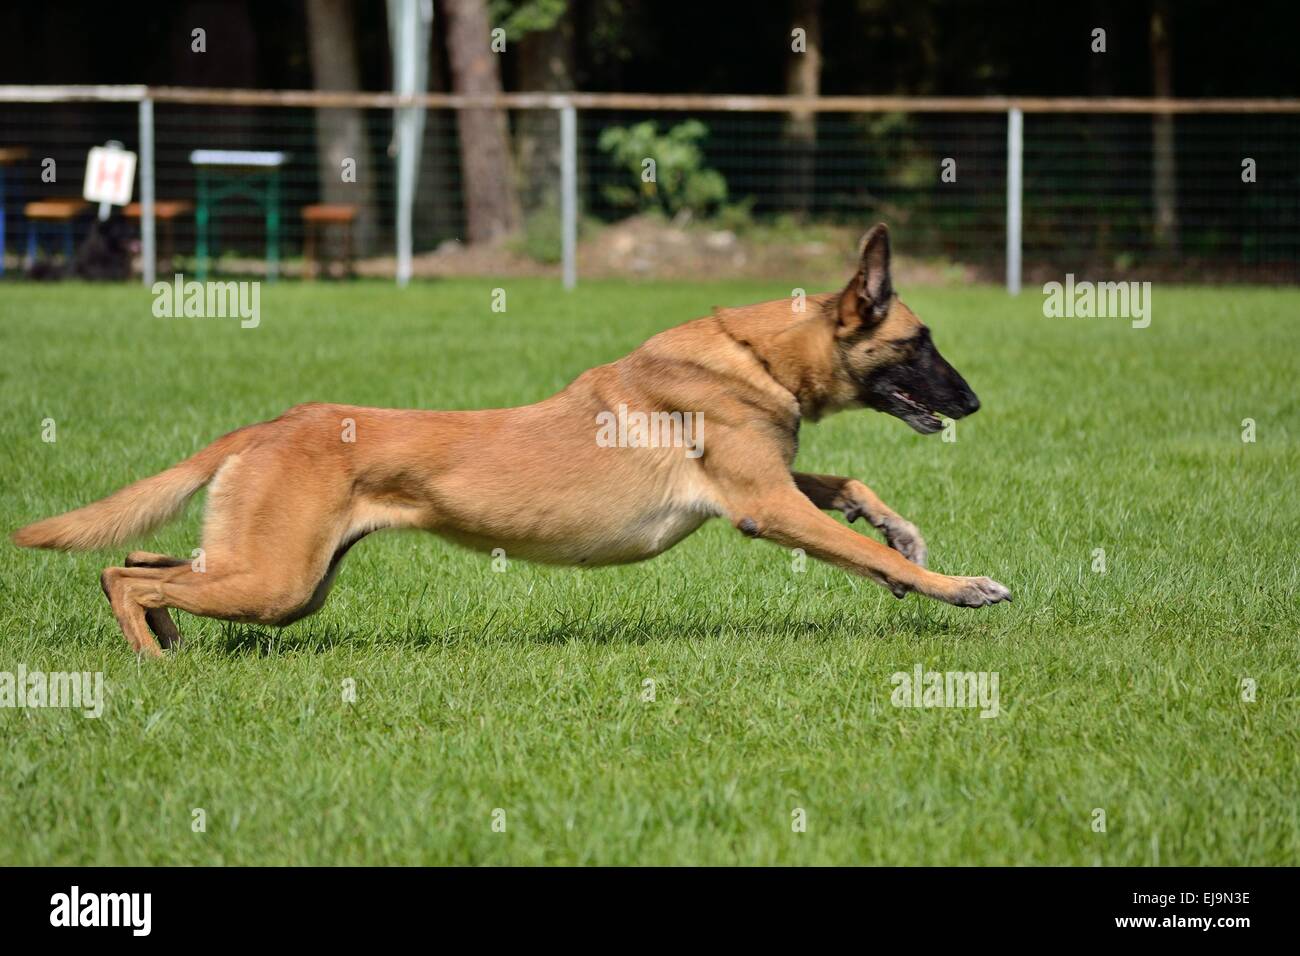 Belgian Shepherd runs Stock Photo